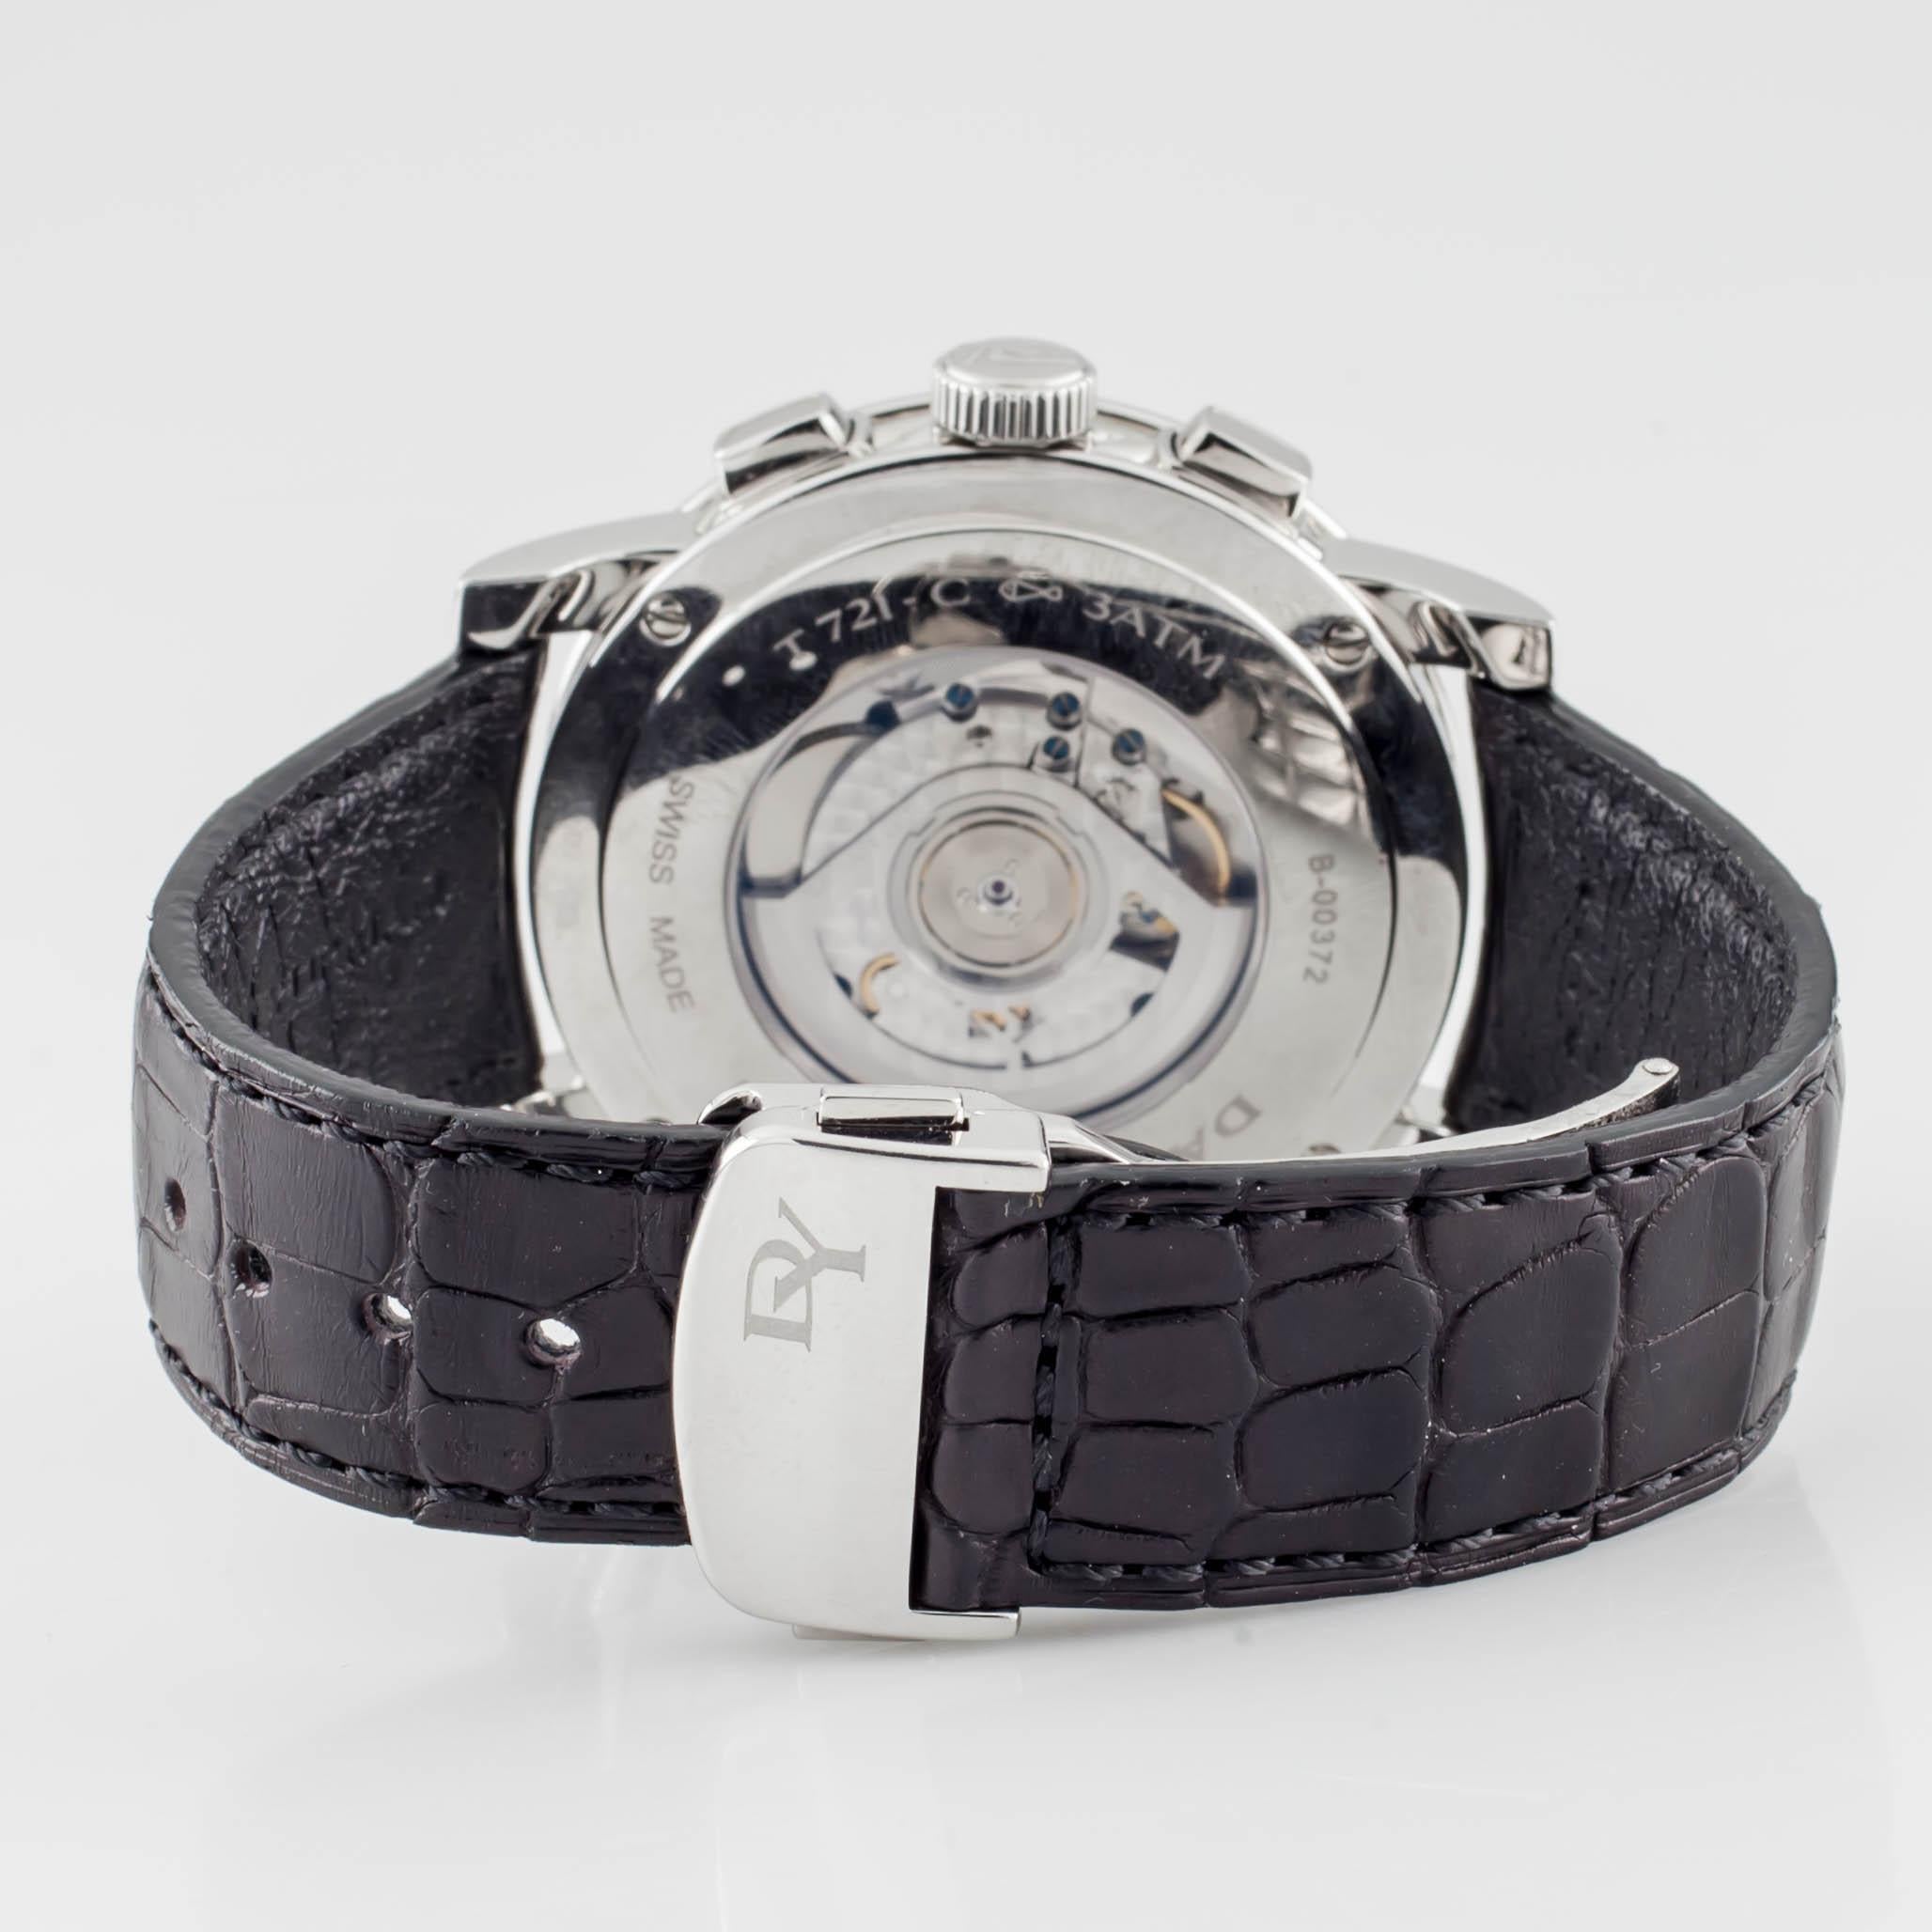 Round Cut David Yurman Classic Chronograph Stainless Steel Watch with Black Diamond Bezel